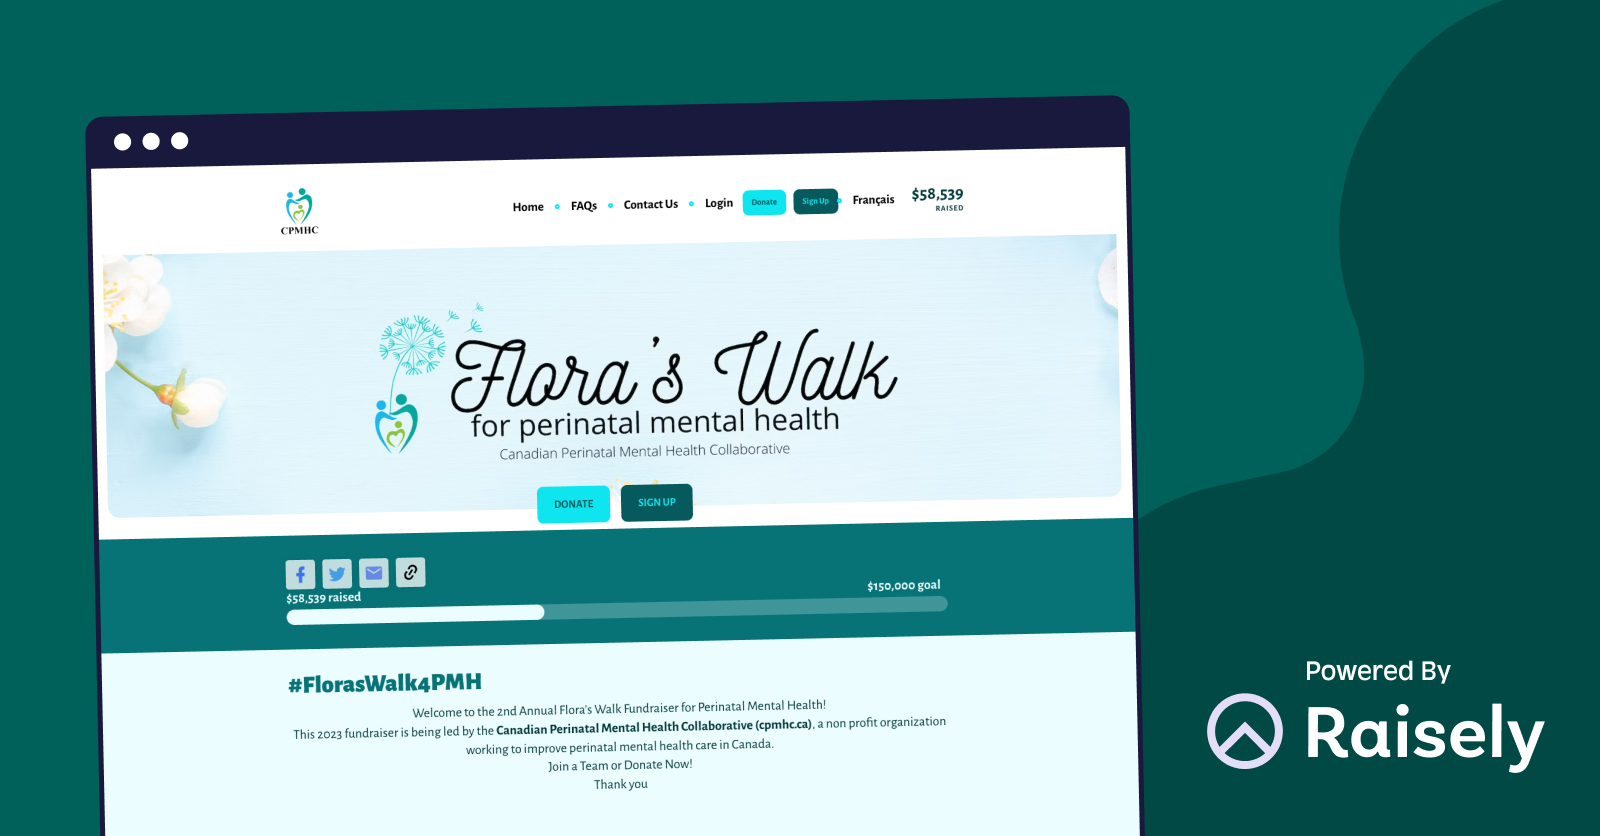 Canadian Perinatal Mental Health Collaborative's Flora’s Walk campaign.